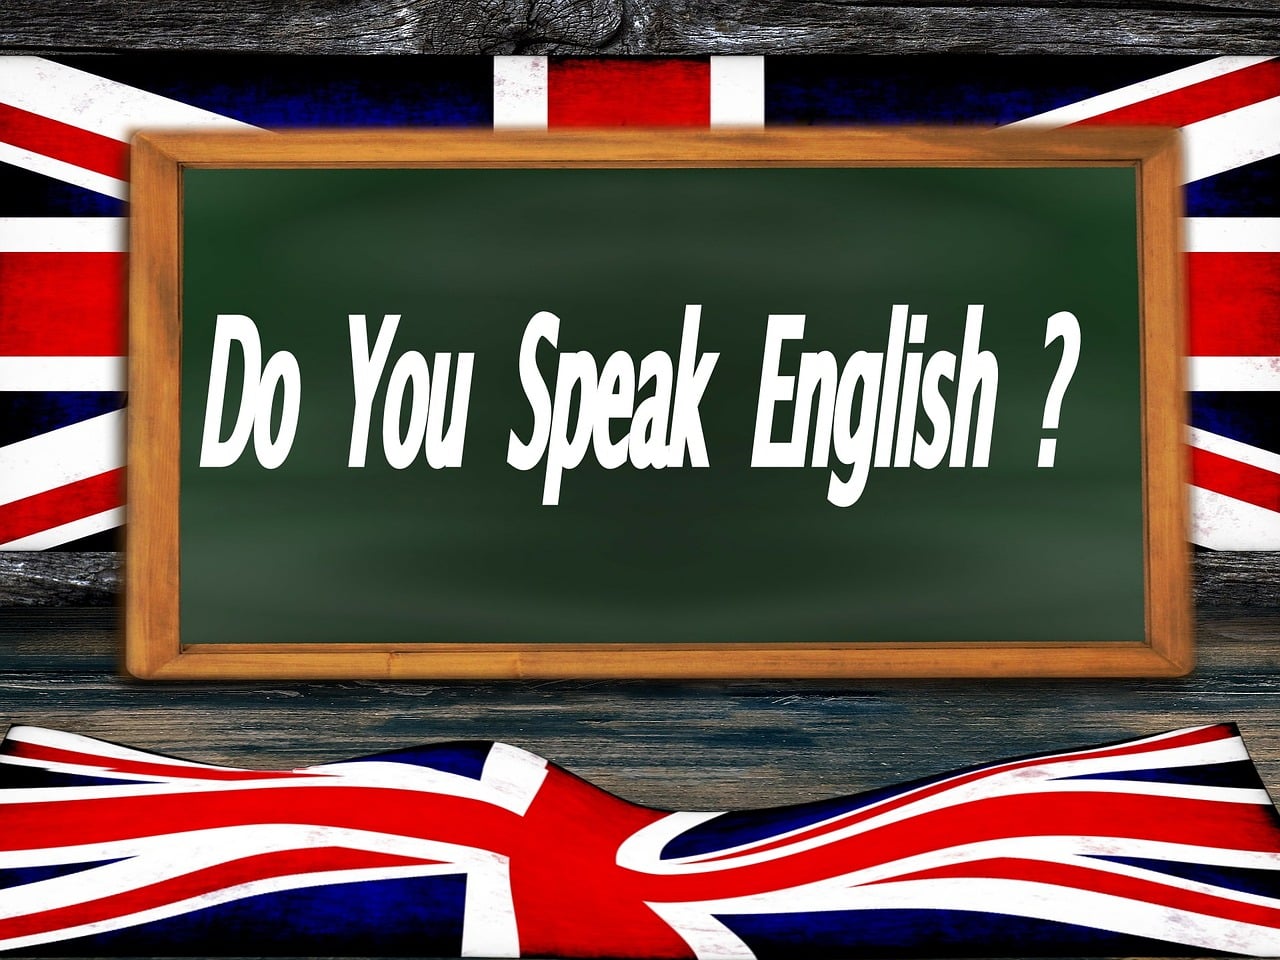 Hadapi Kompetisi, Tunanetra Perlu Tingkatkan Kompetensi Berbahasaa Inggris